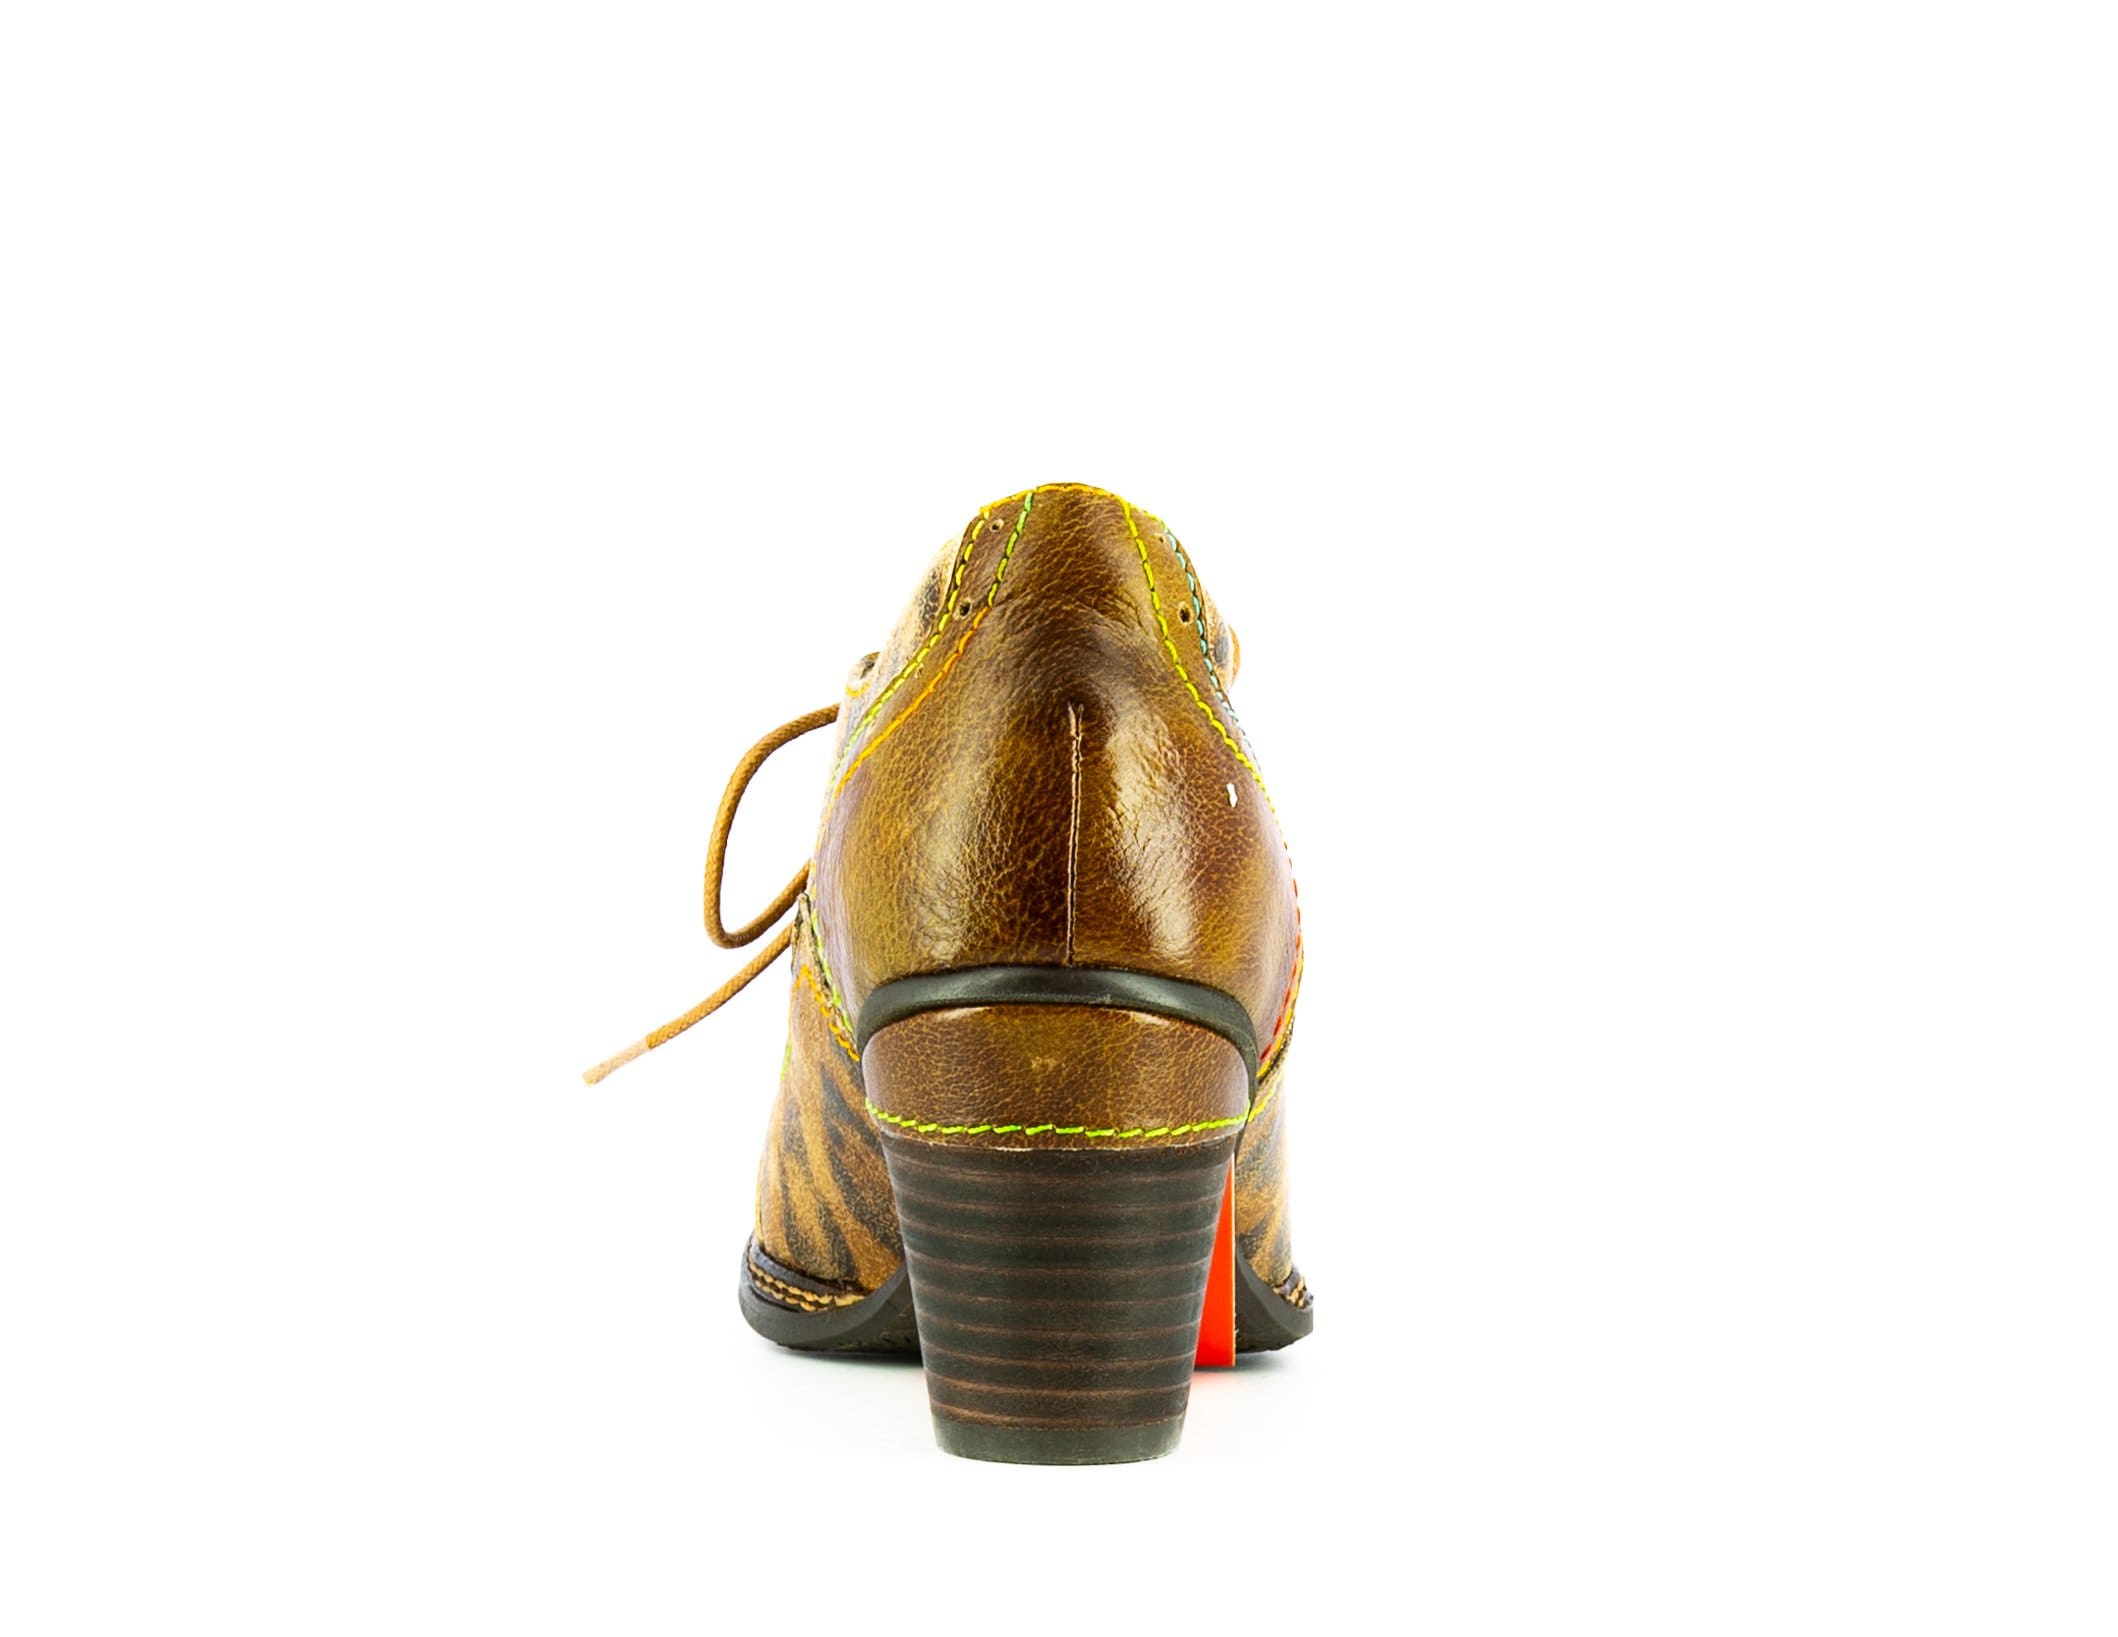 Shoe AGCATHEO 192 - Moccasin